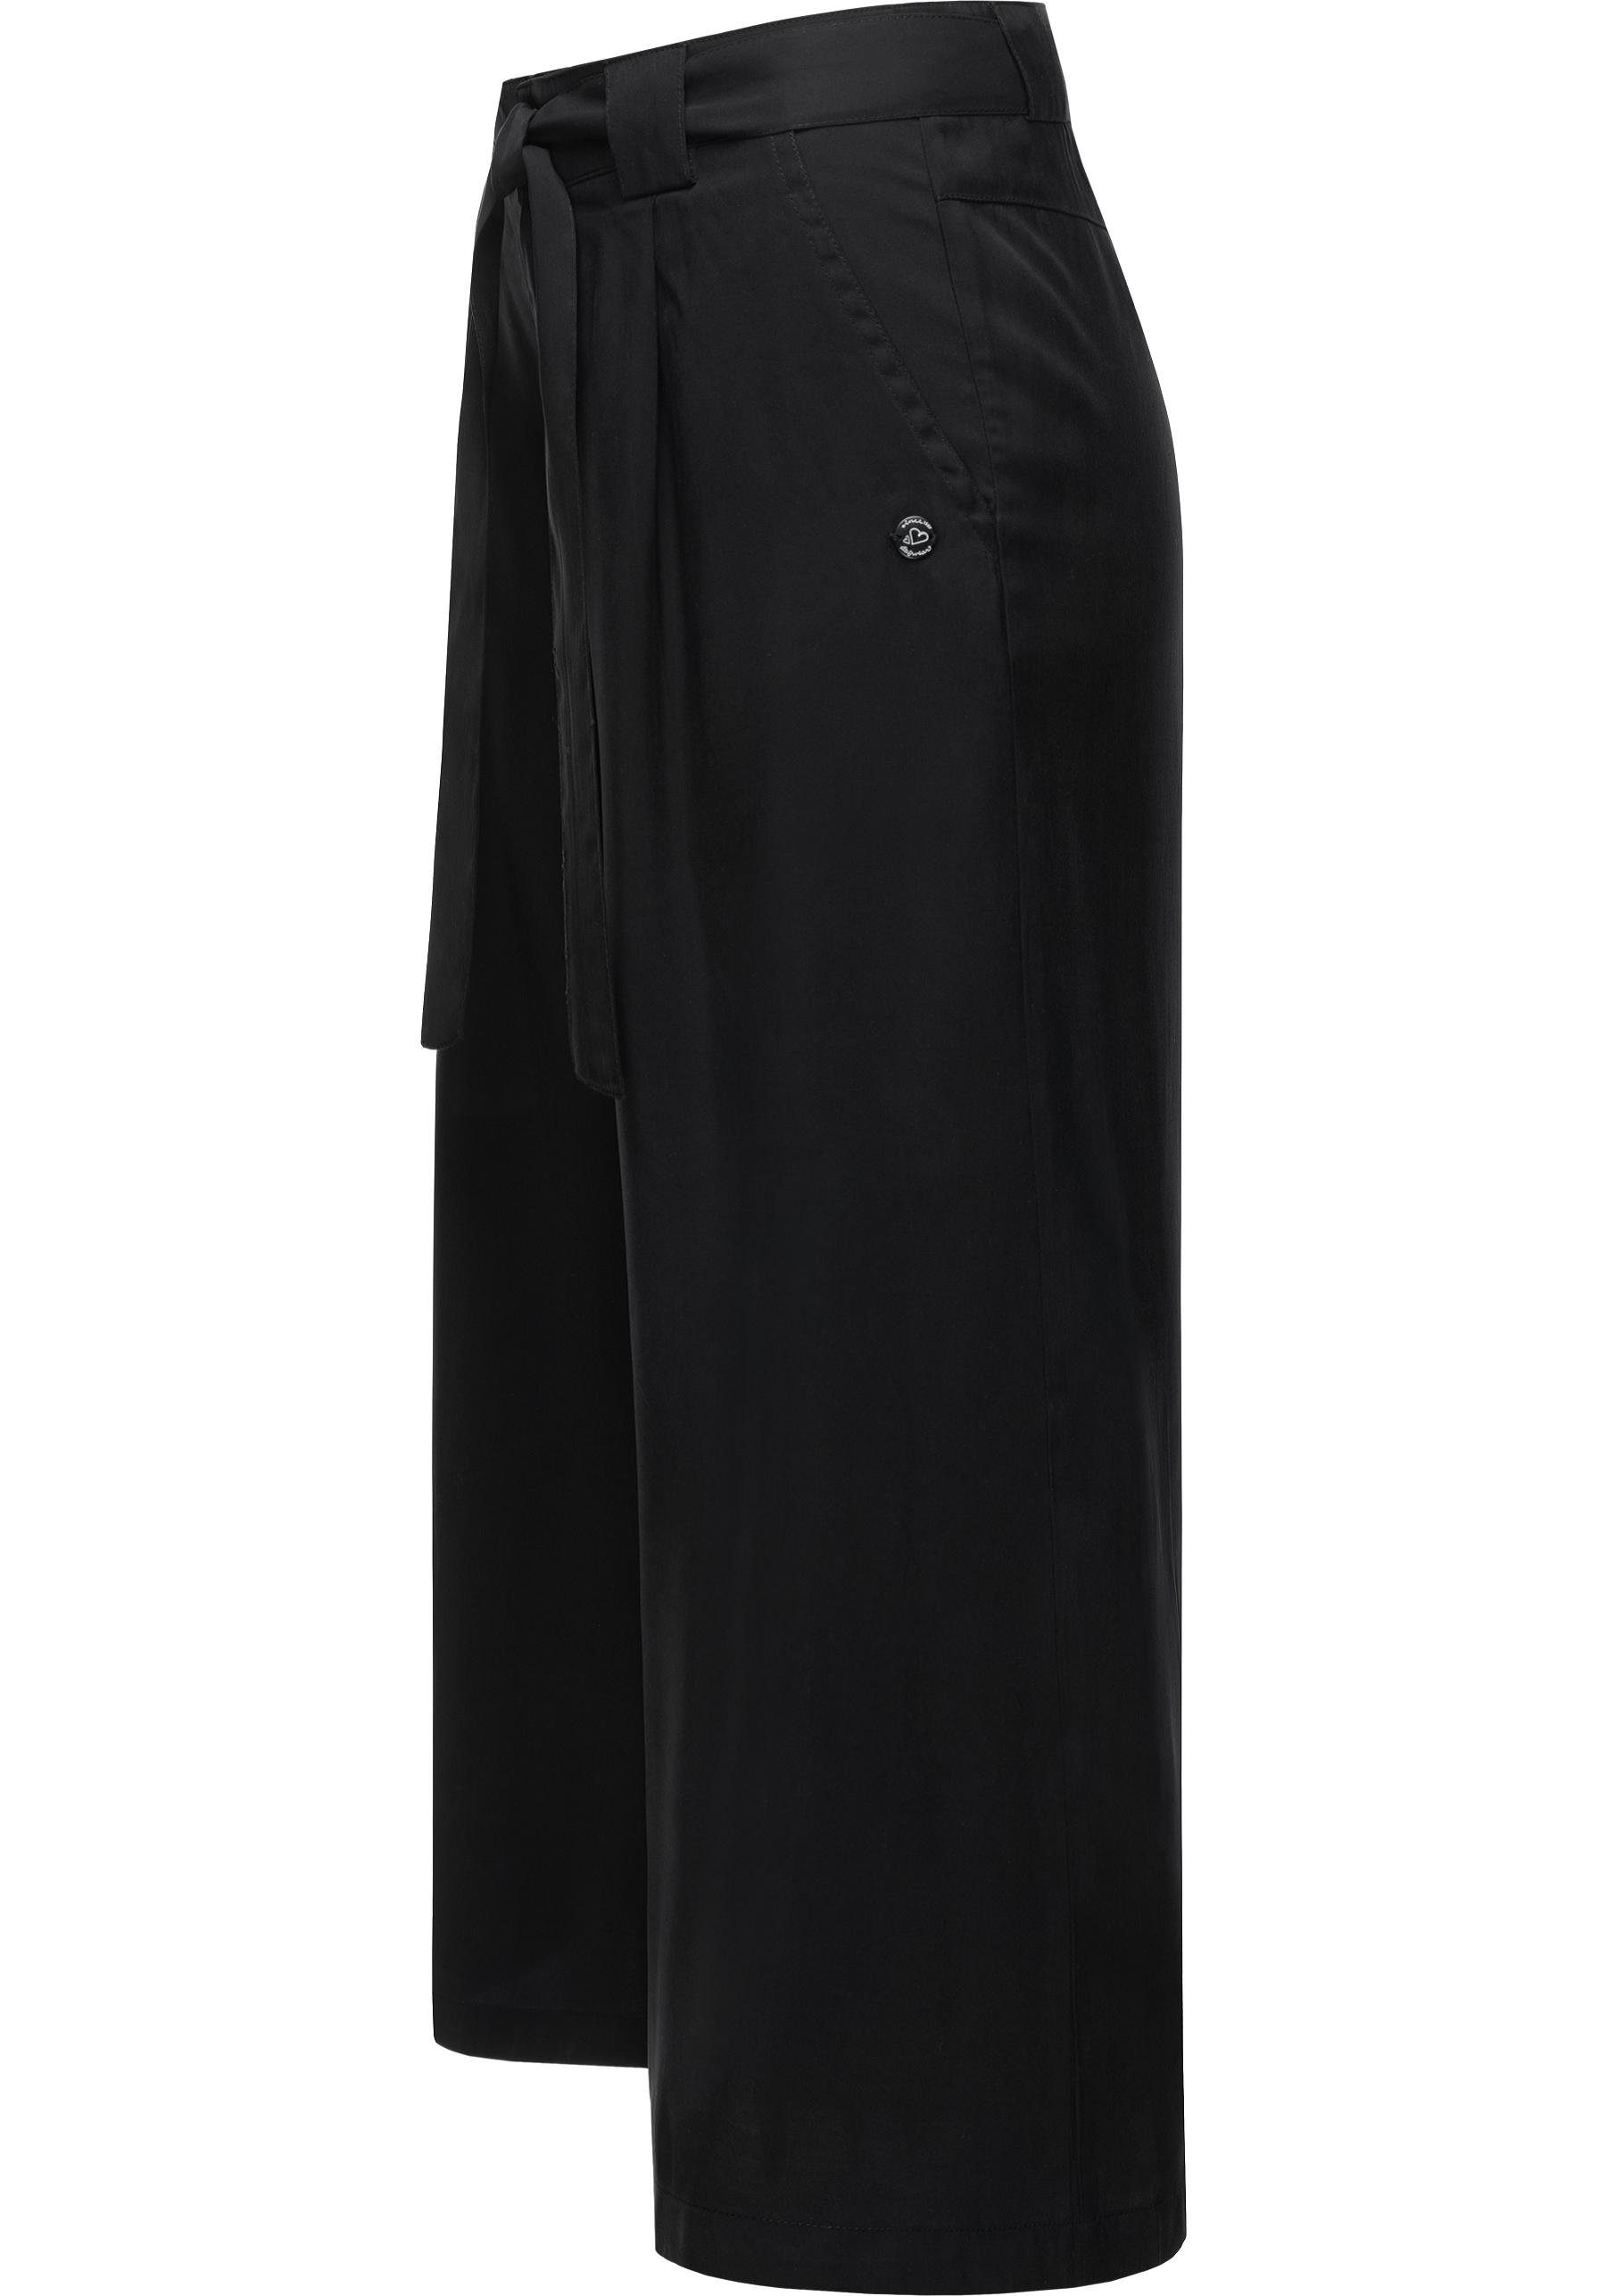 Gürtel Ragwear schwarz Stylische Hose Yarai mit Stoffhose Culotte